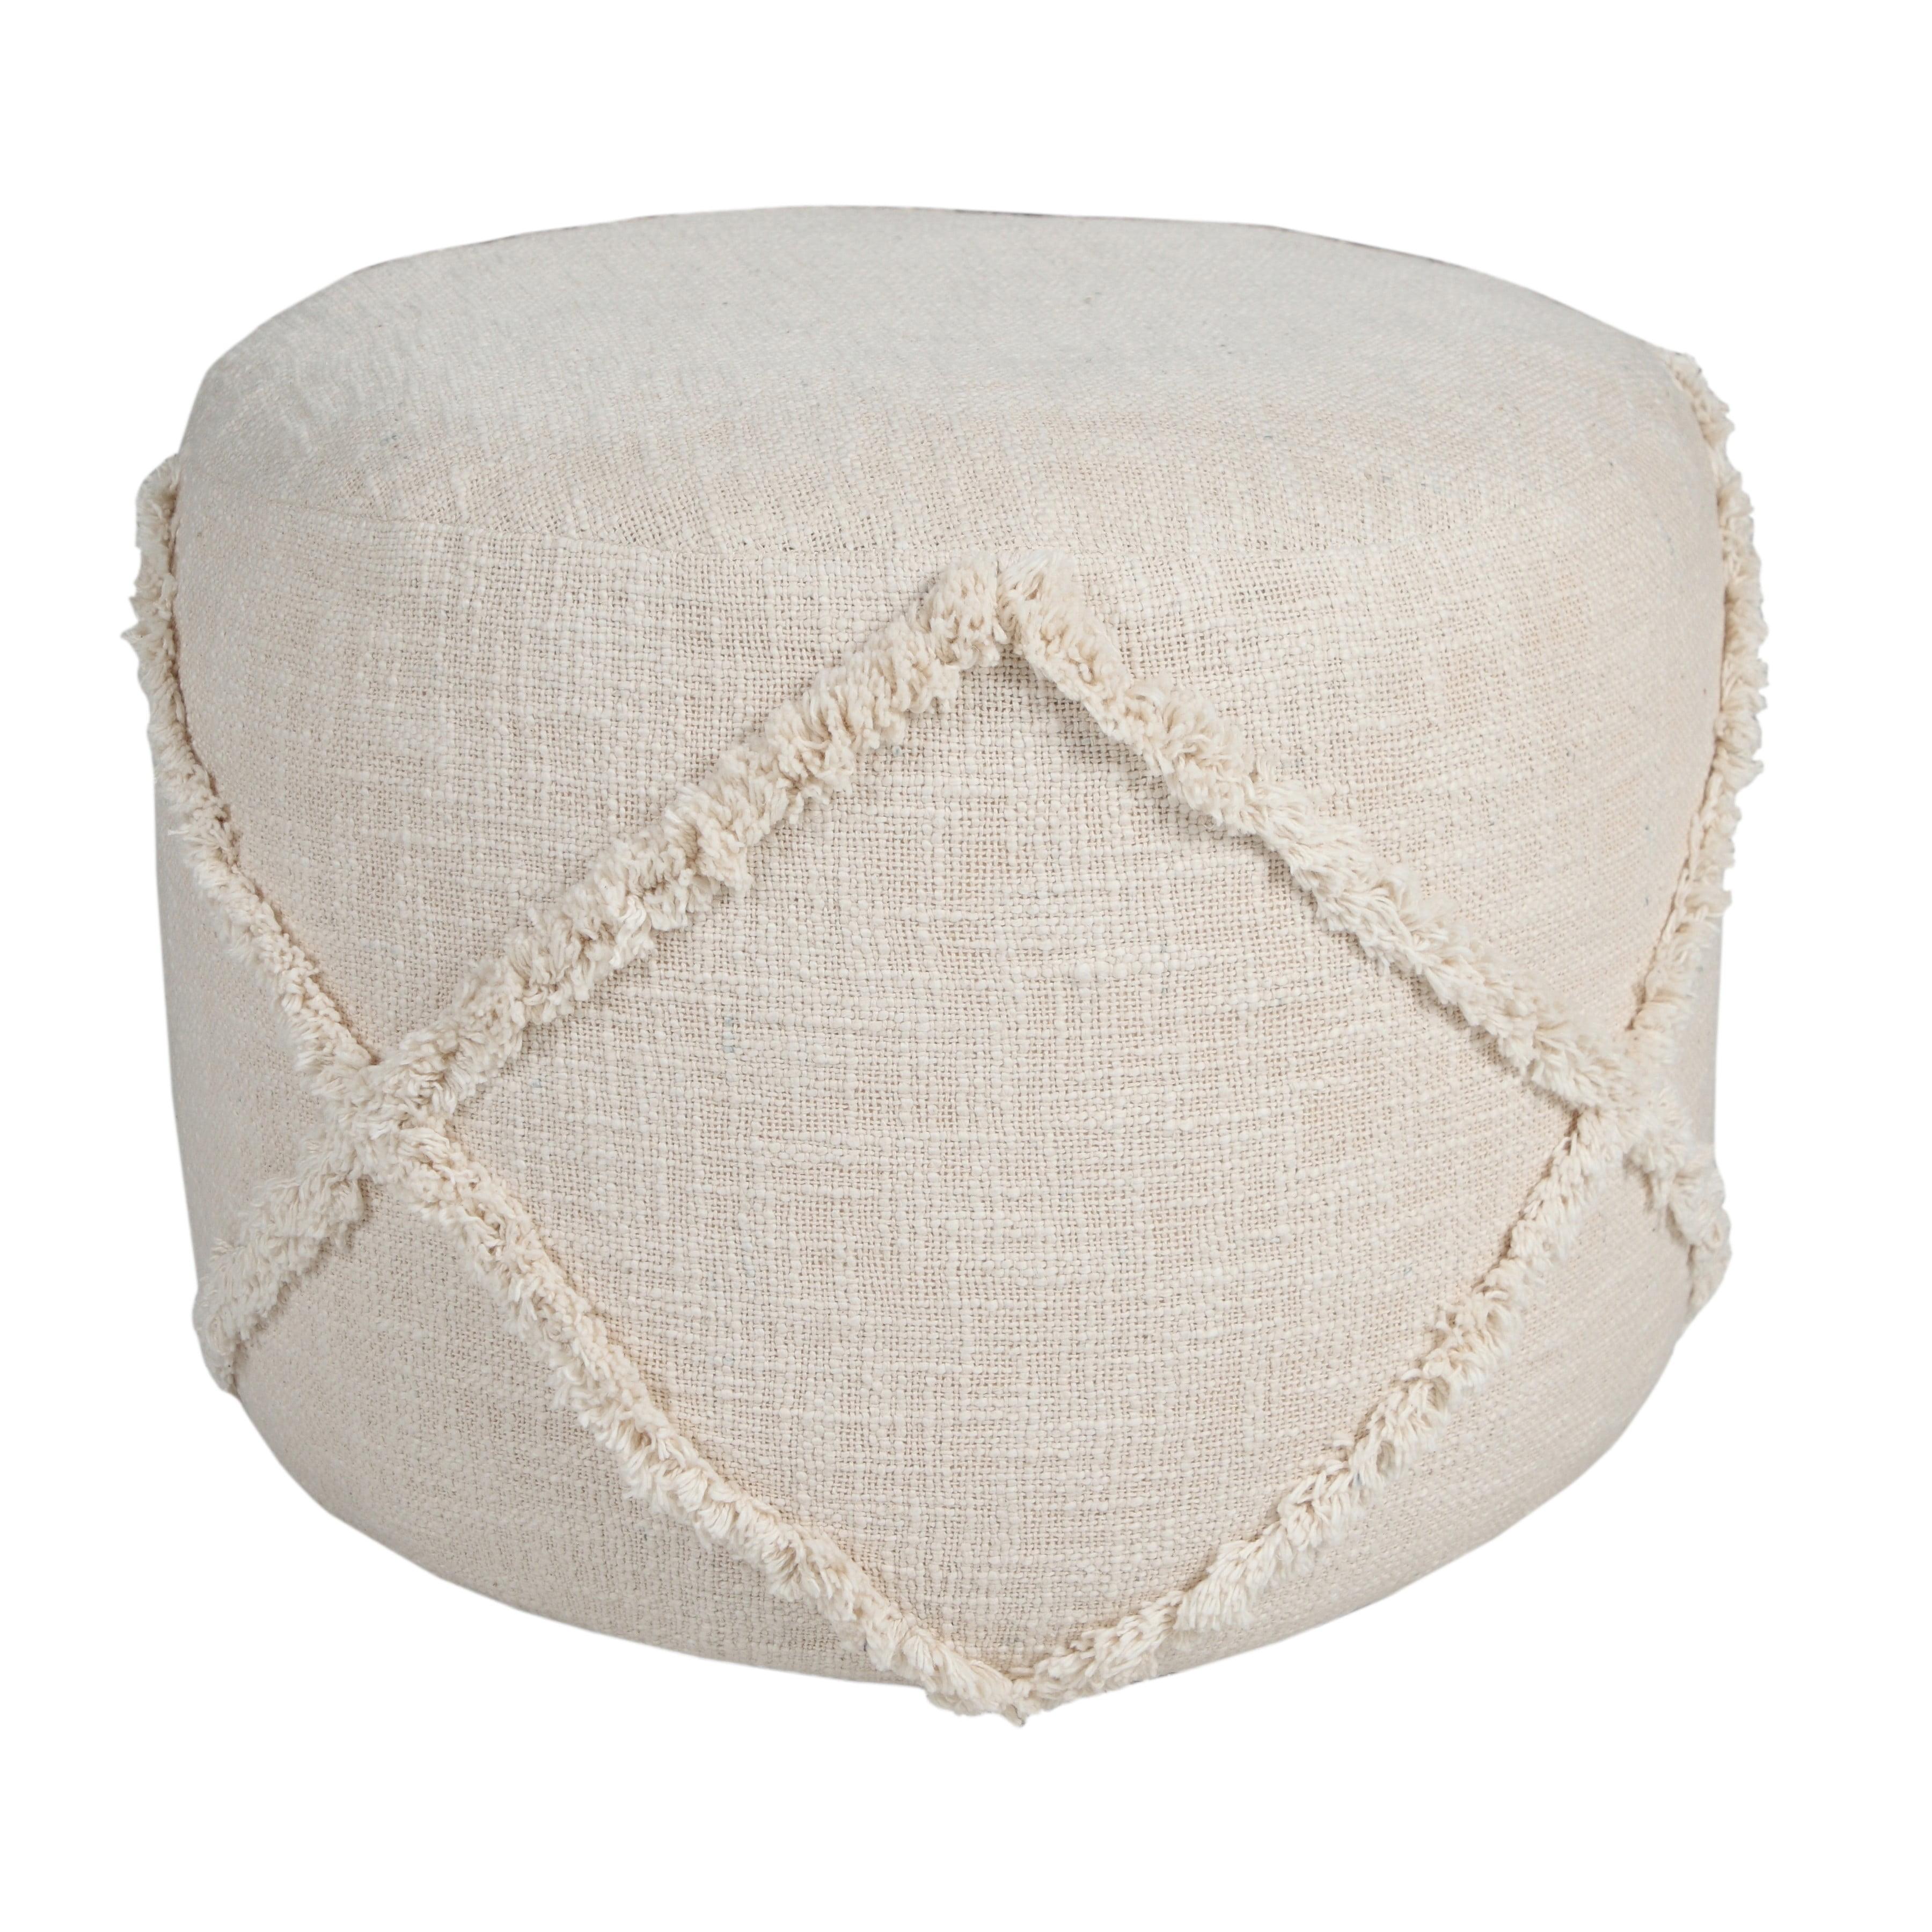 Contemporary Beige Tufted Cotton Round Pouf, 18"x14"